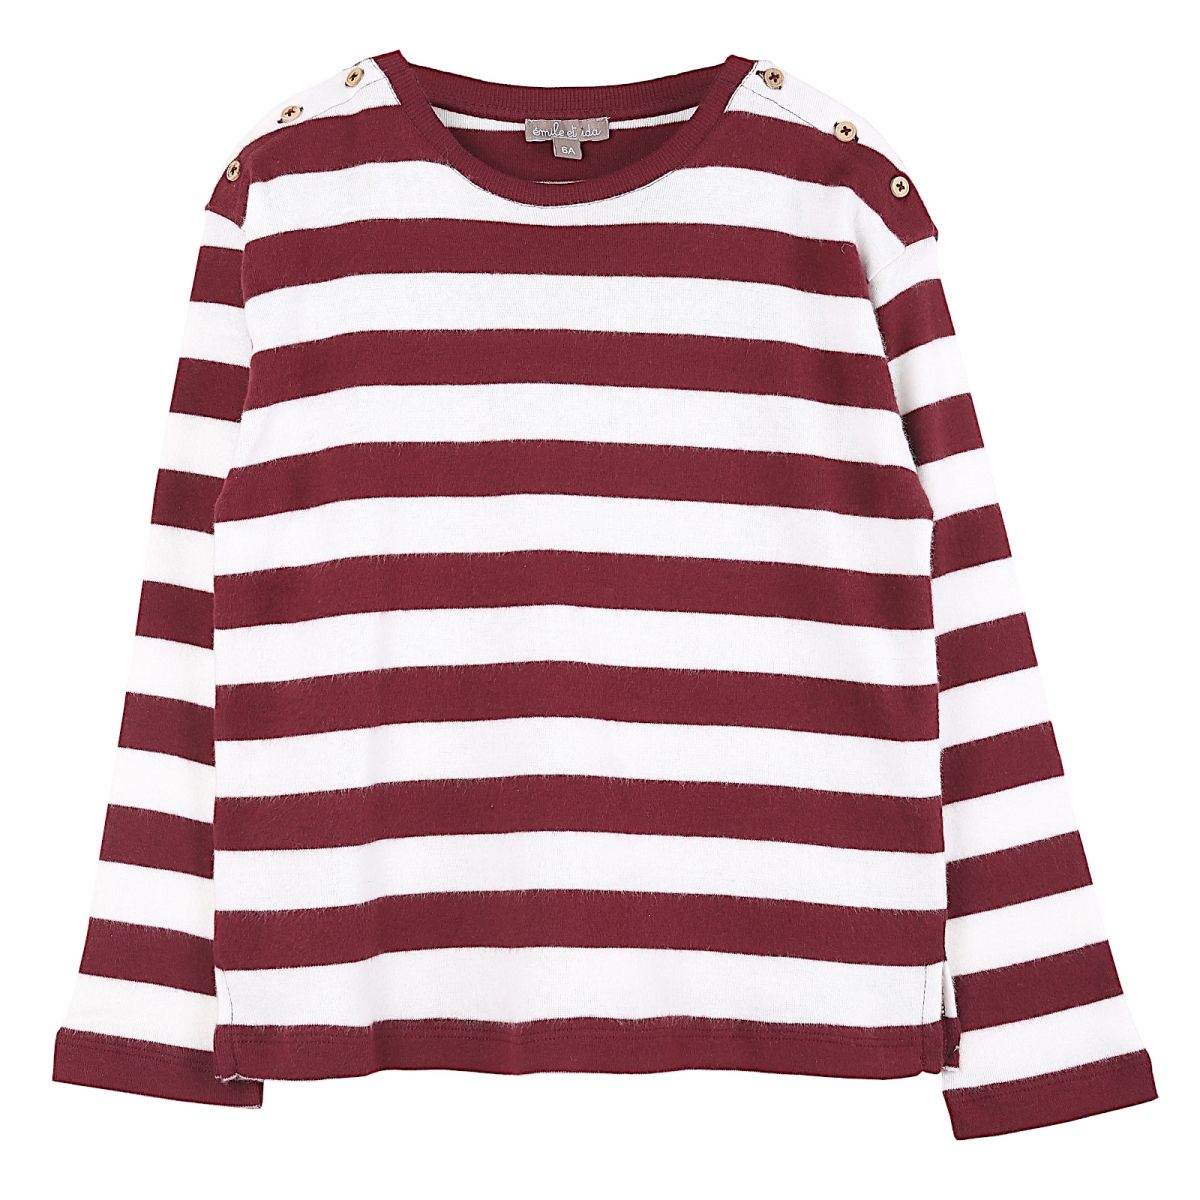 Emile et Ida Long sleeve t-shirt stripped burgundy P146-B 